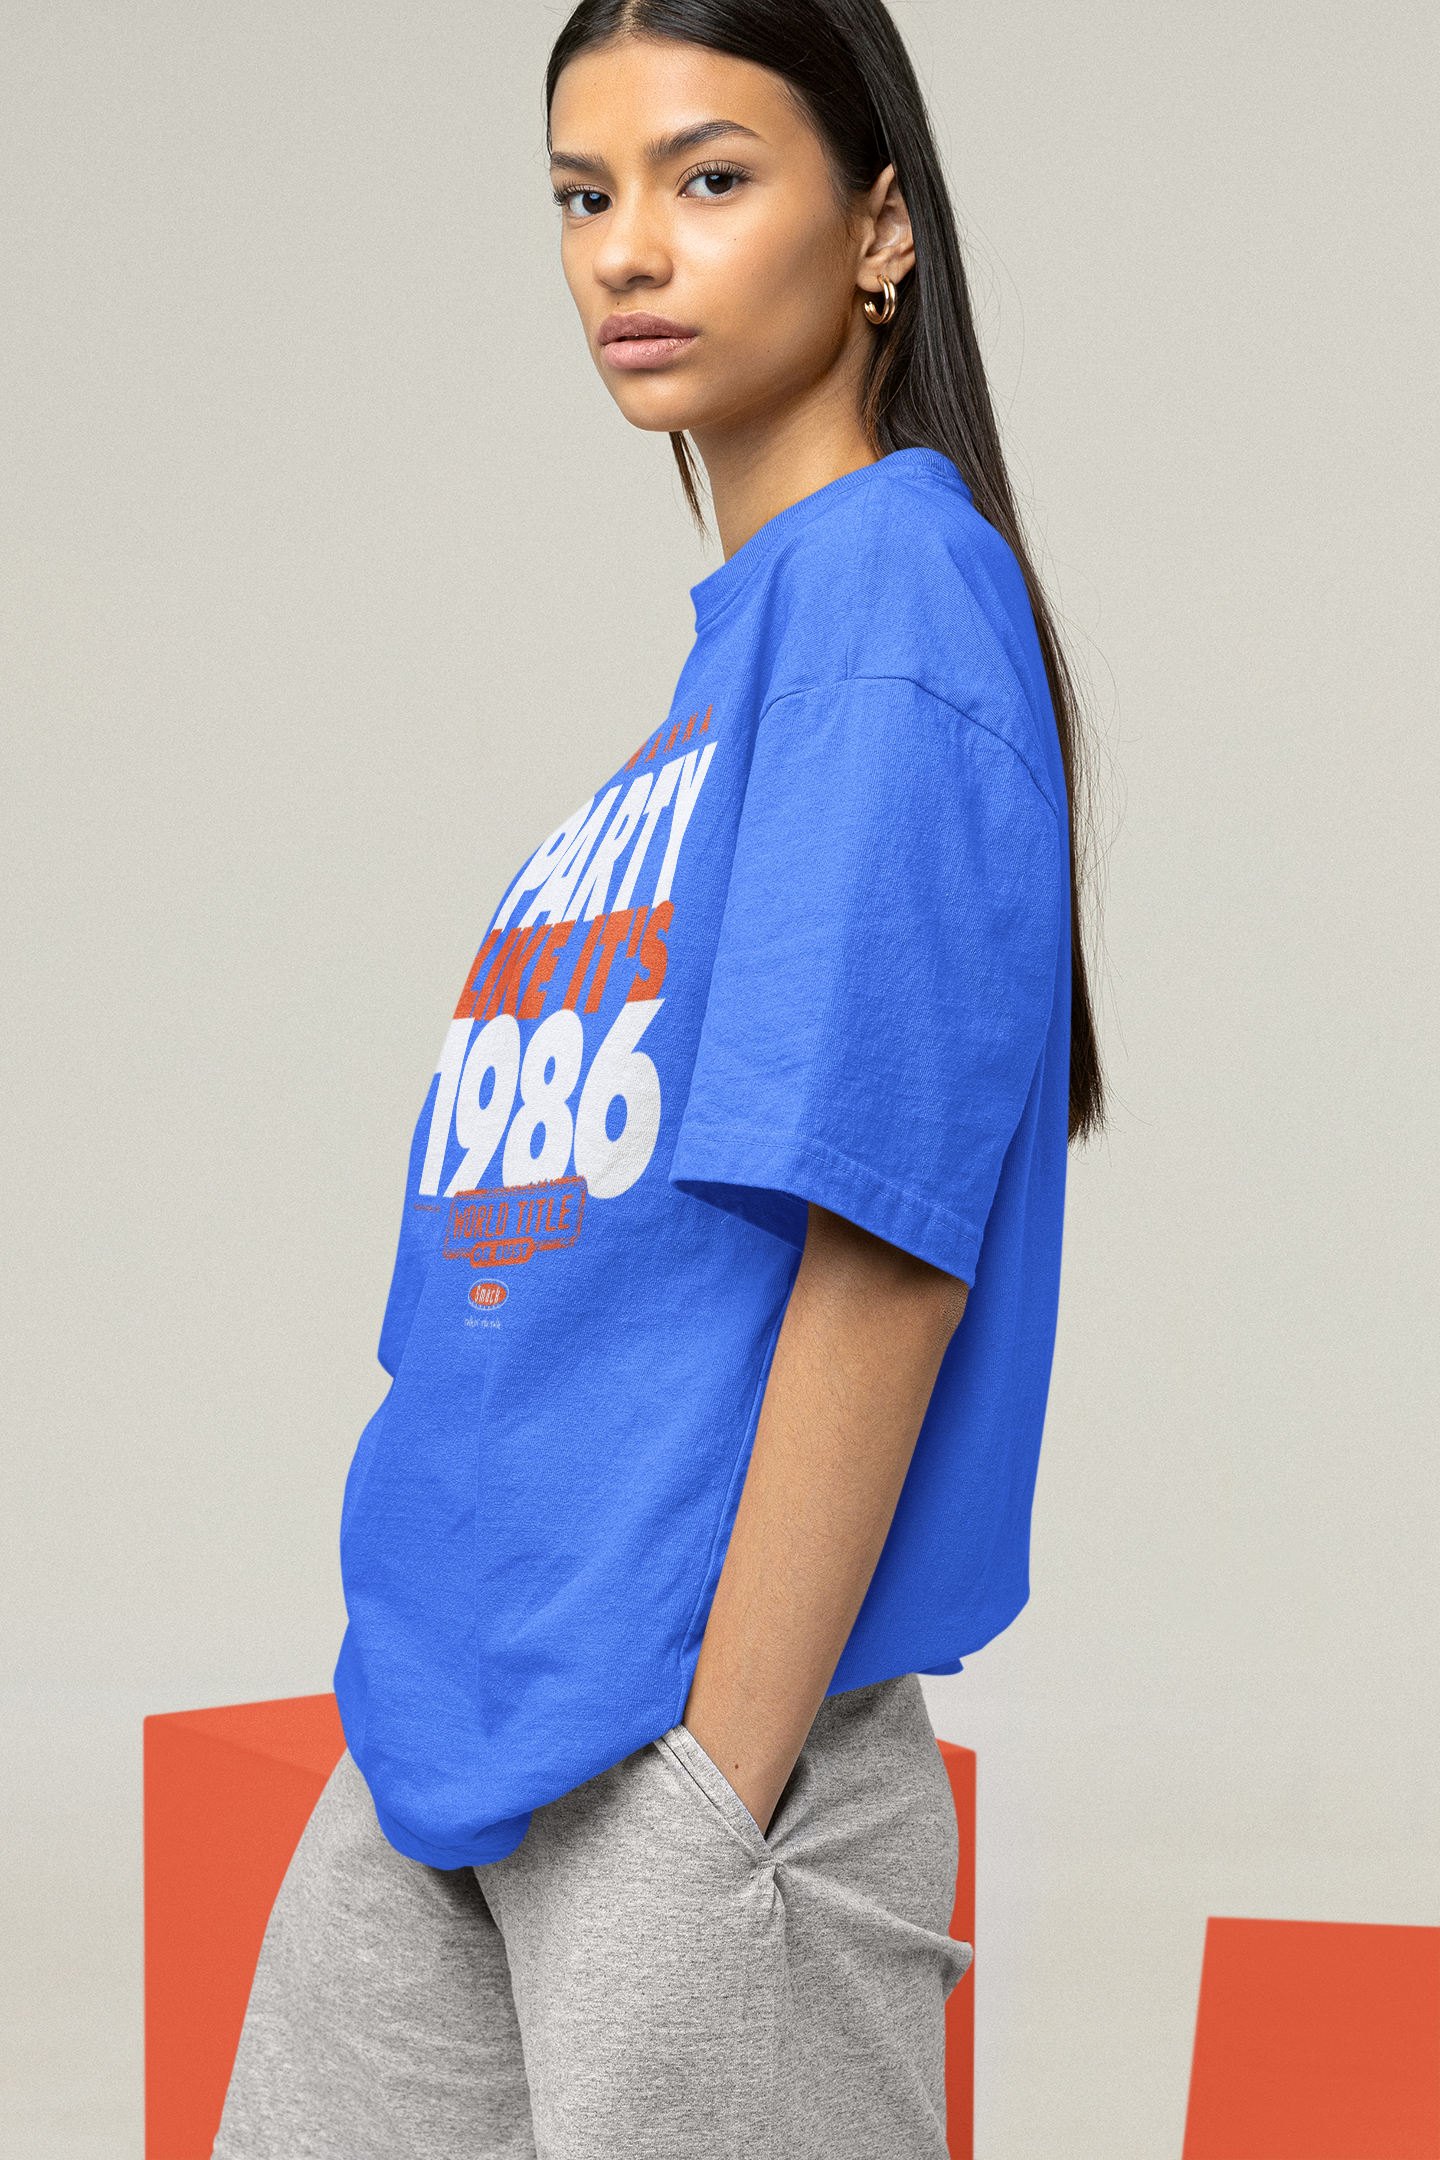 Smack Apparel New York Baseball Fans (NYM). I Wanna Party Like It's 1986 Shirt Long Sleeve / 4XL / Blue